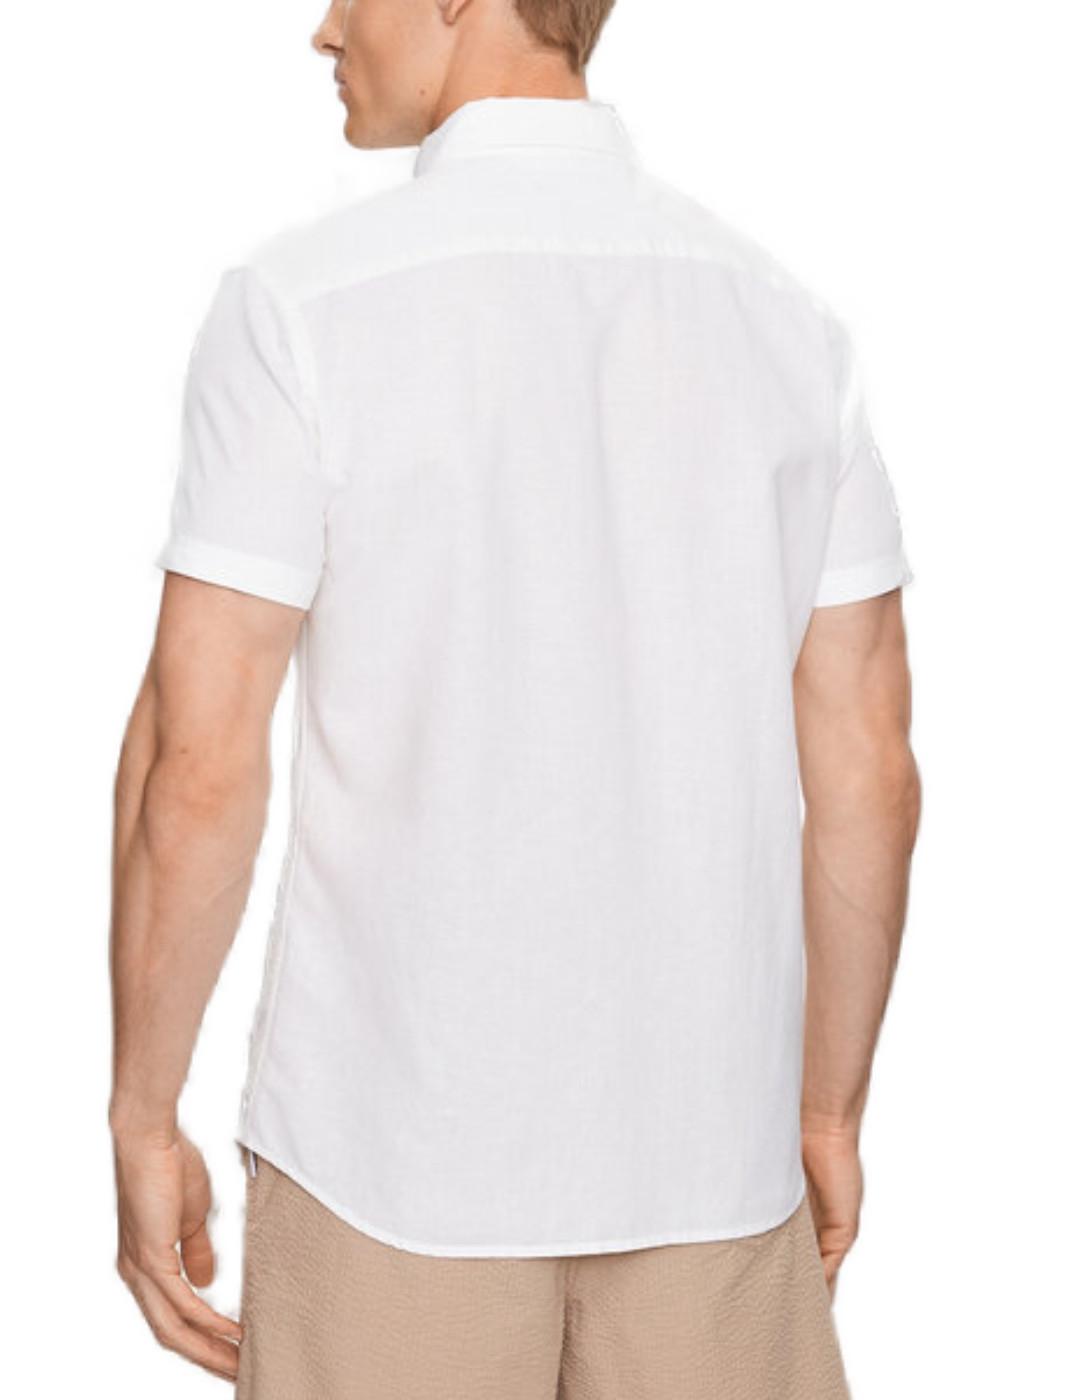 Camisa Jack&Jones Summer blanca manga corta para hombre